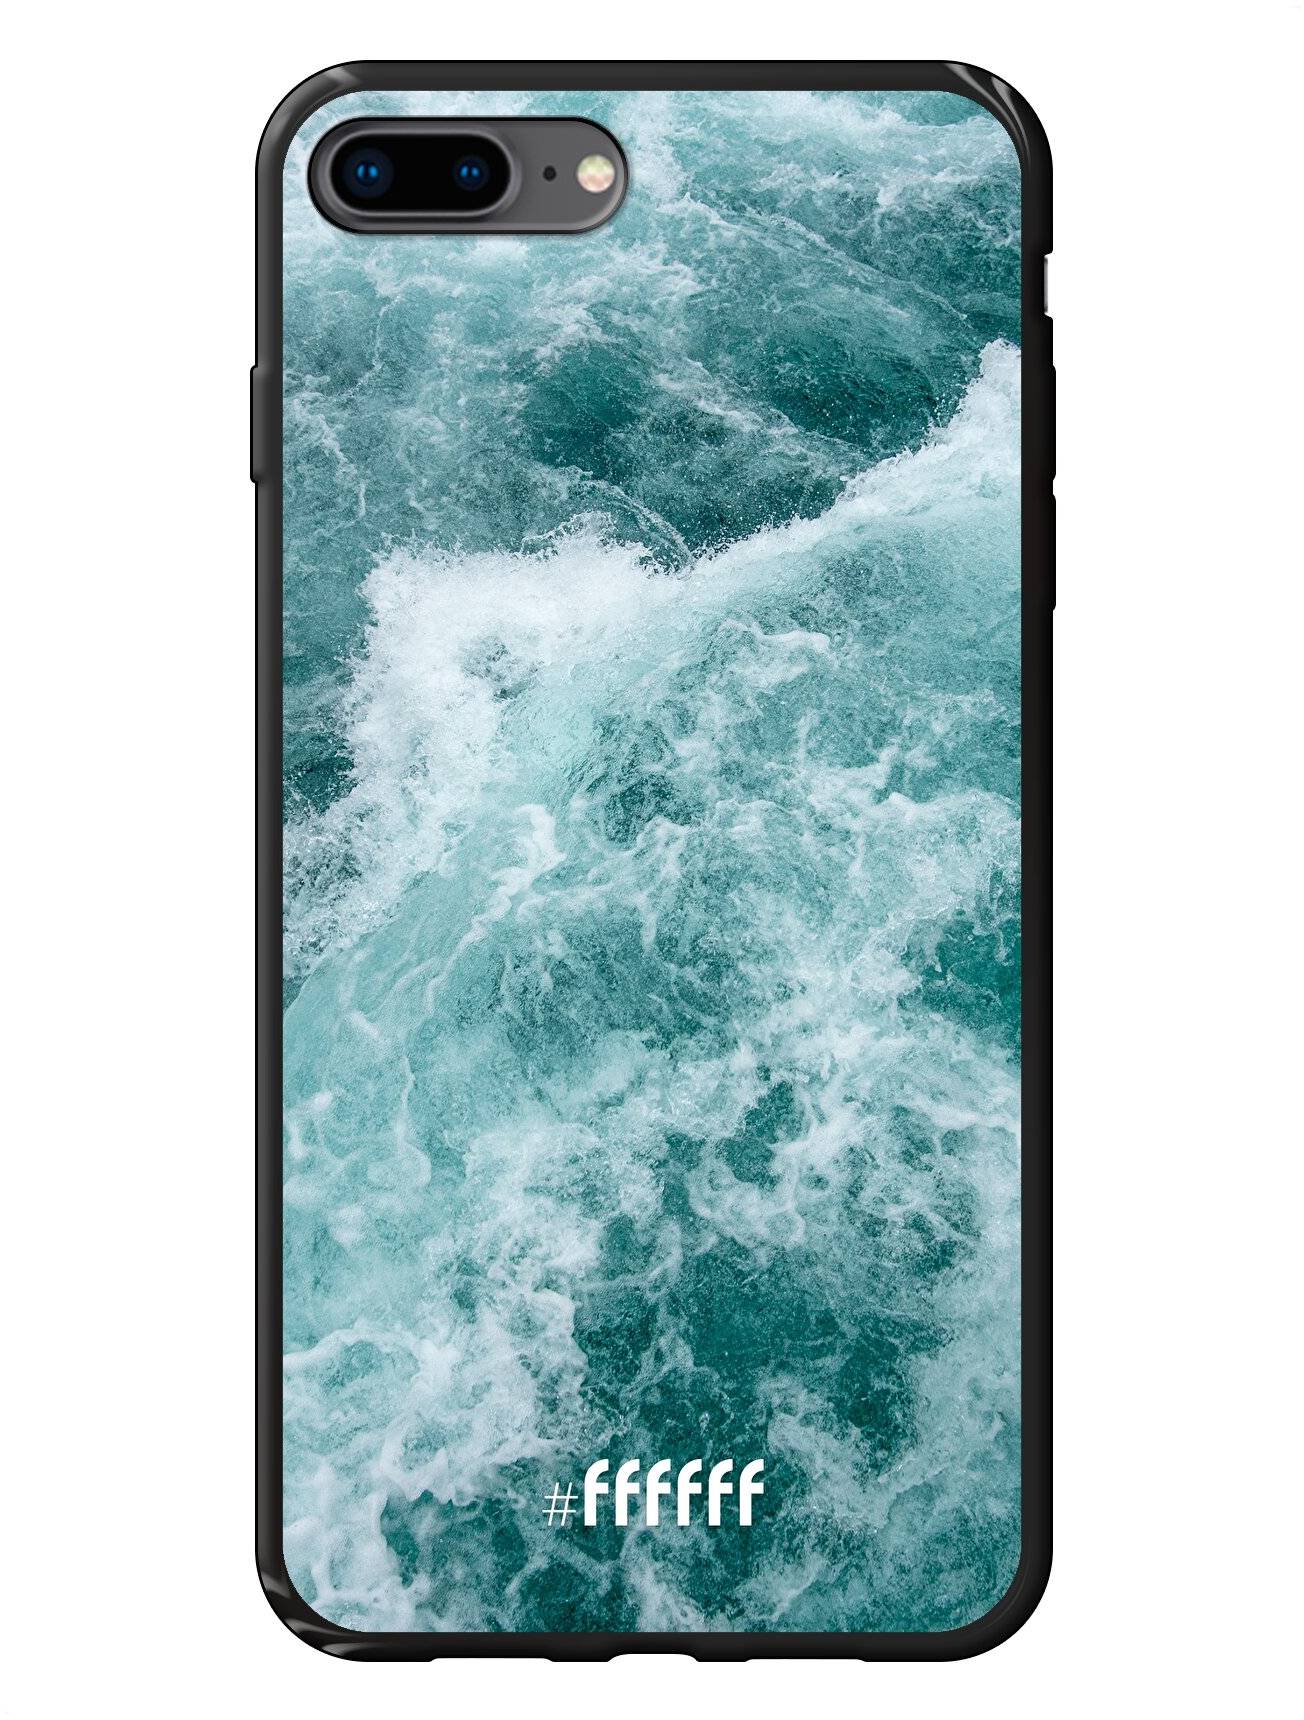 Whitecap Waves iPhone 8 Plus